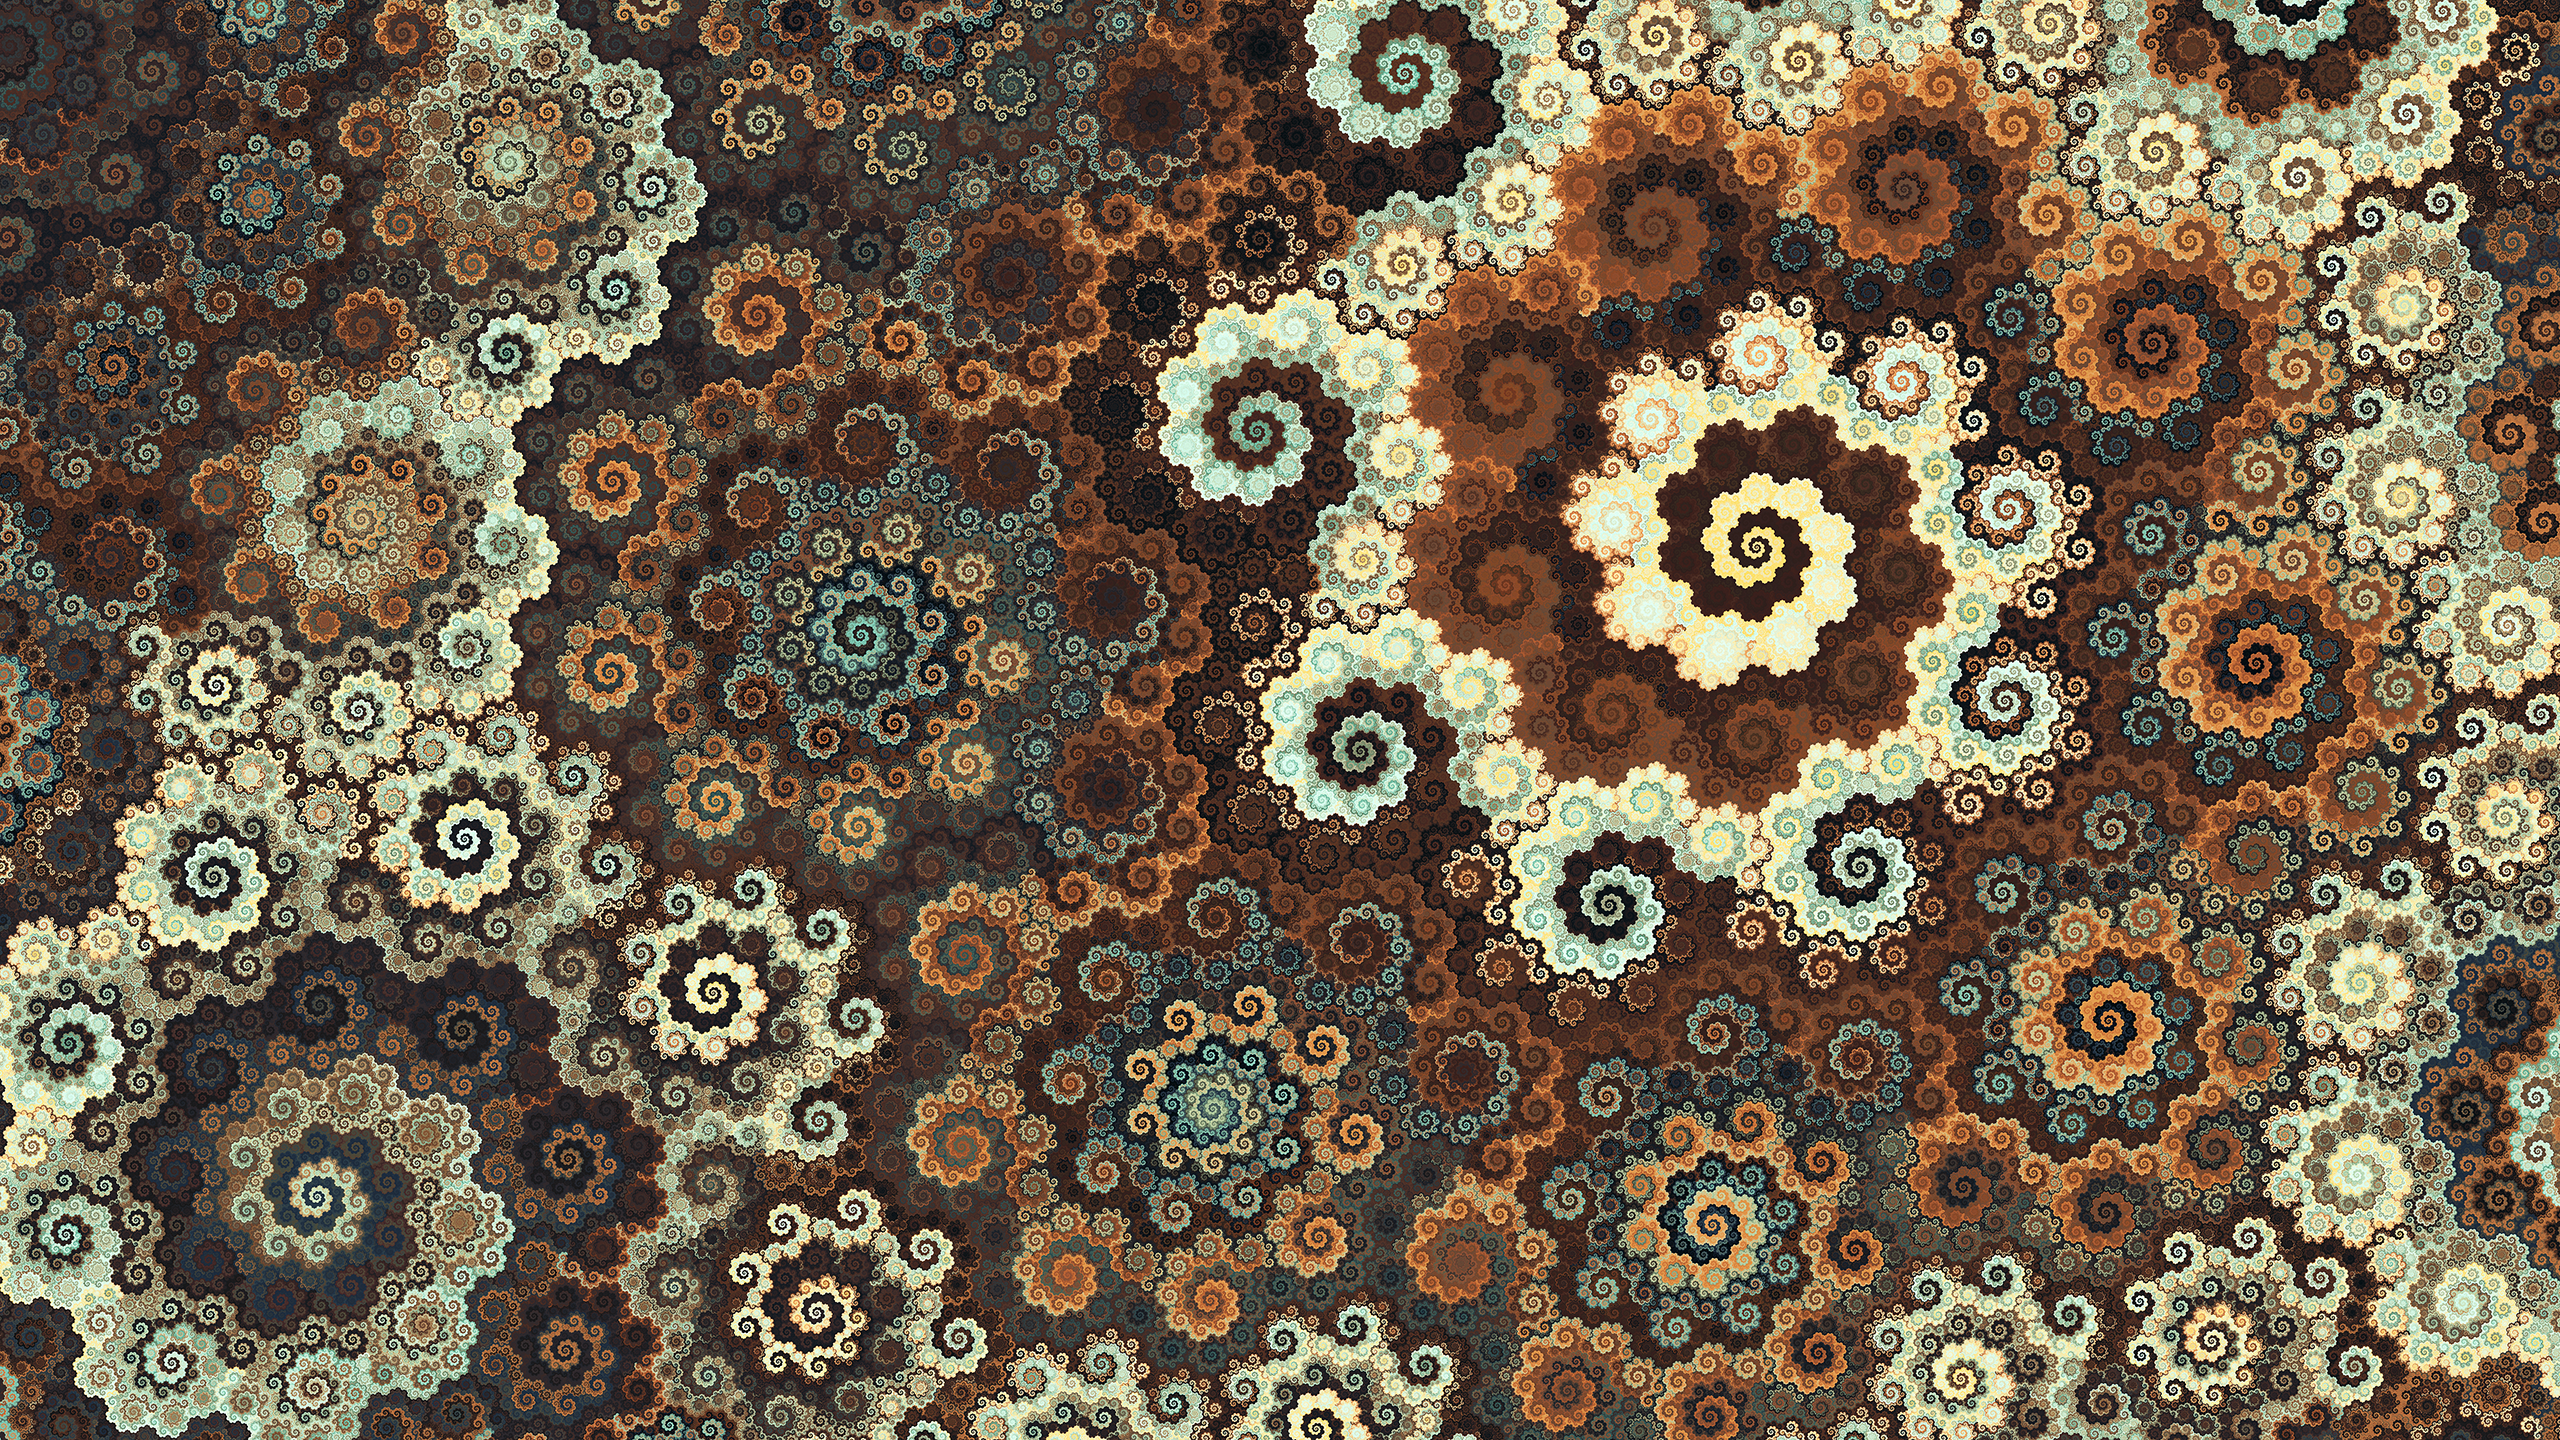 Artistic Fractal Pattern Spiral 2560x1440